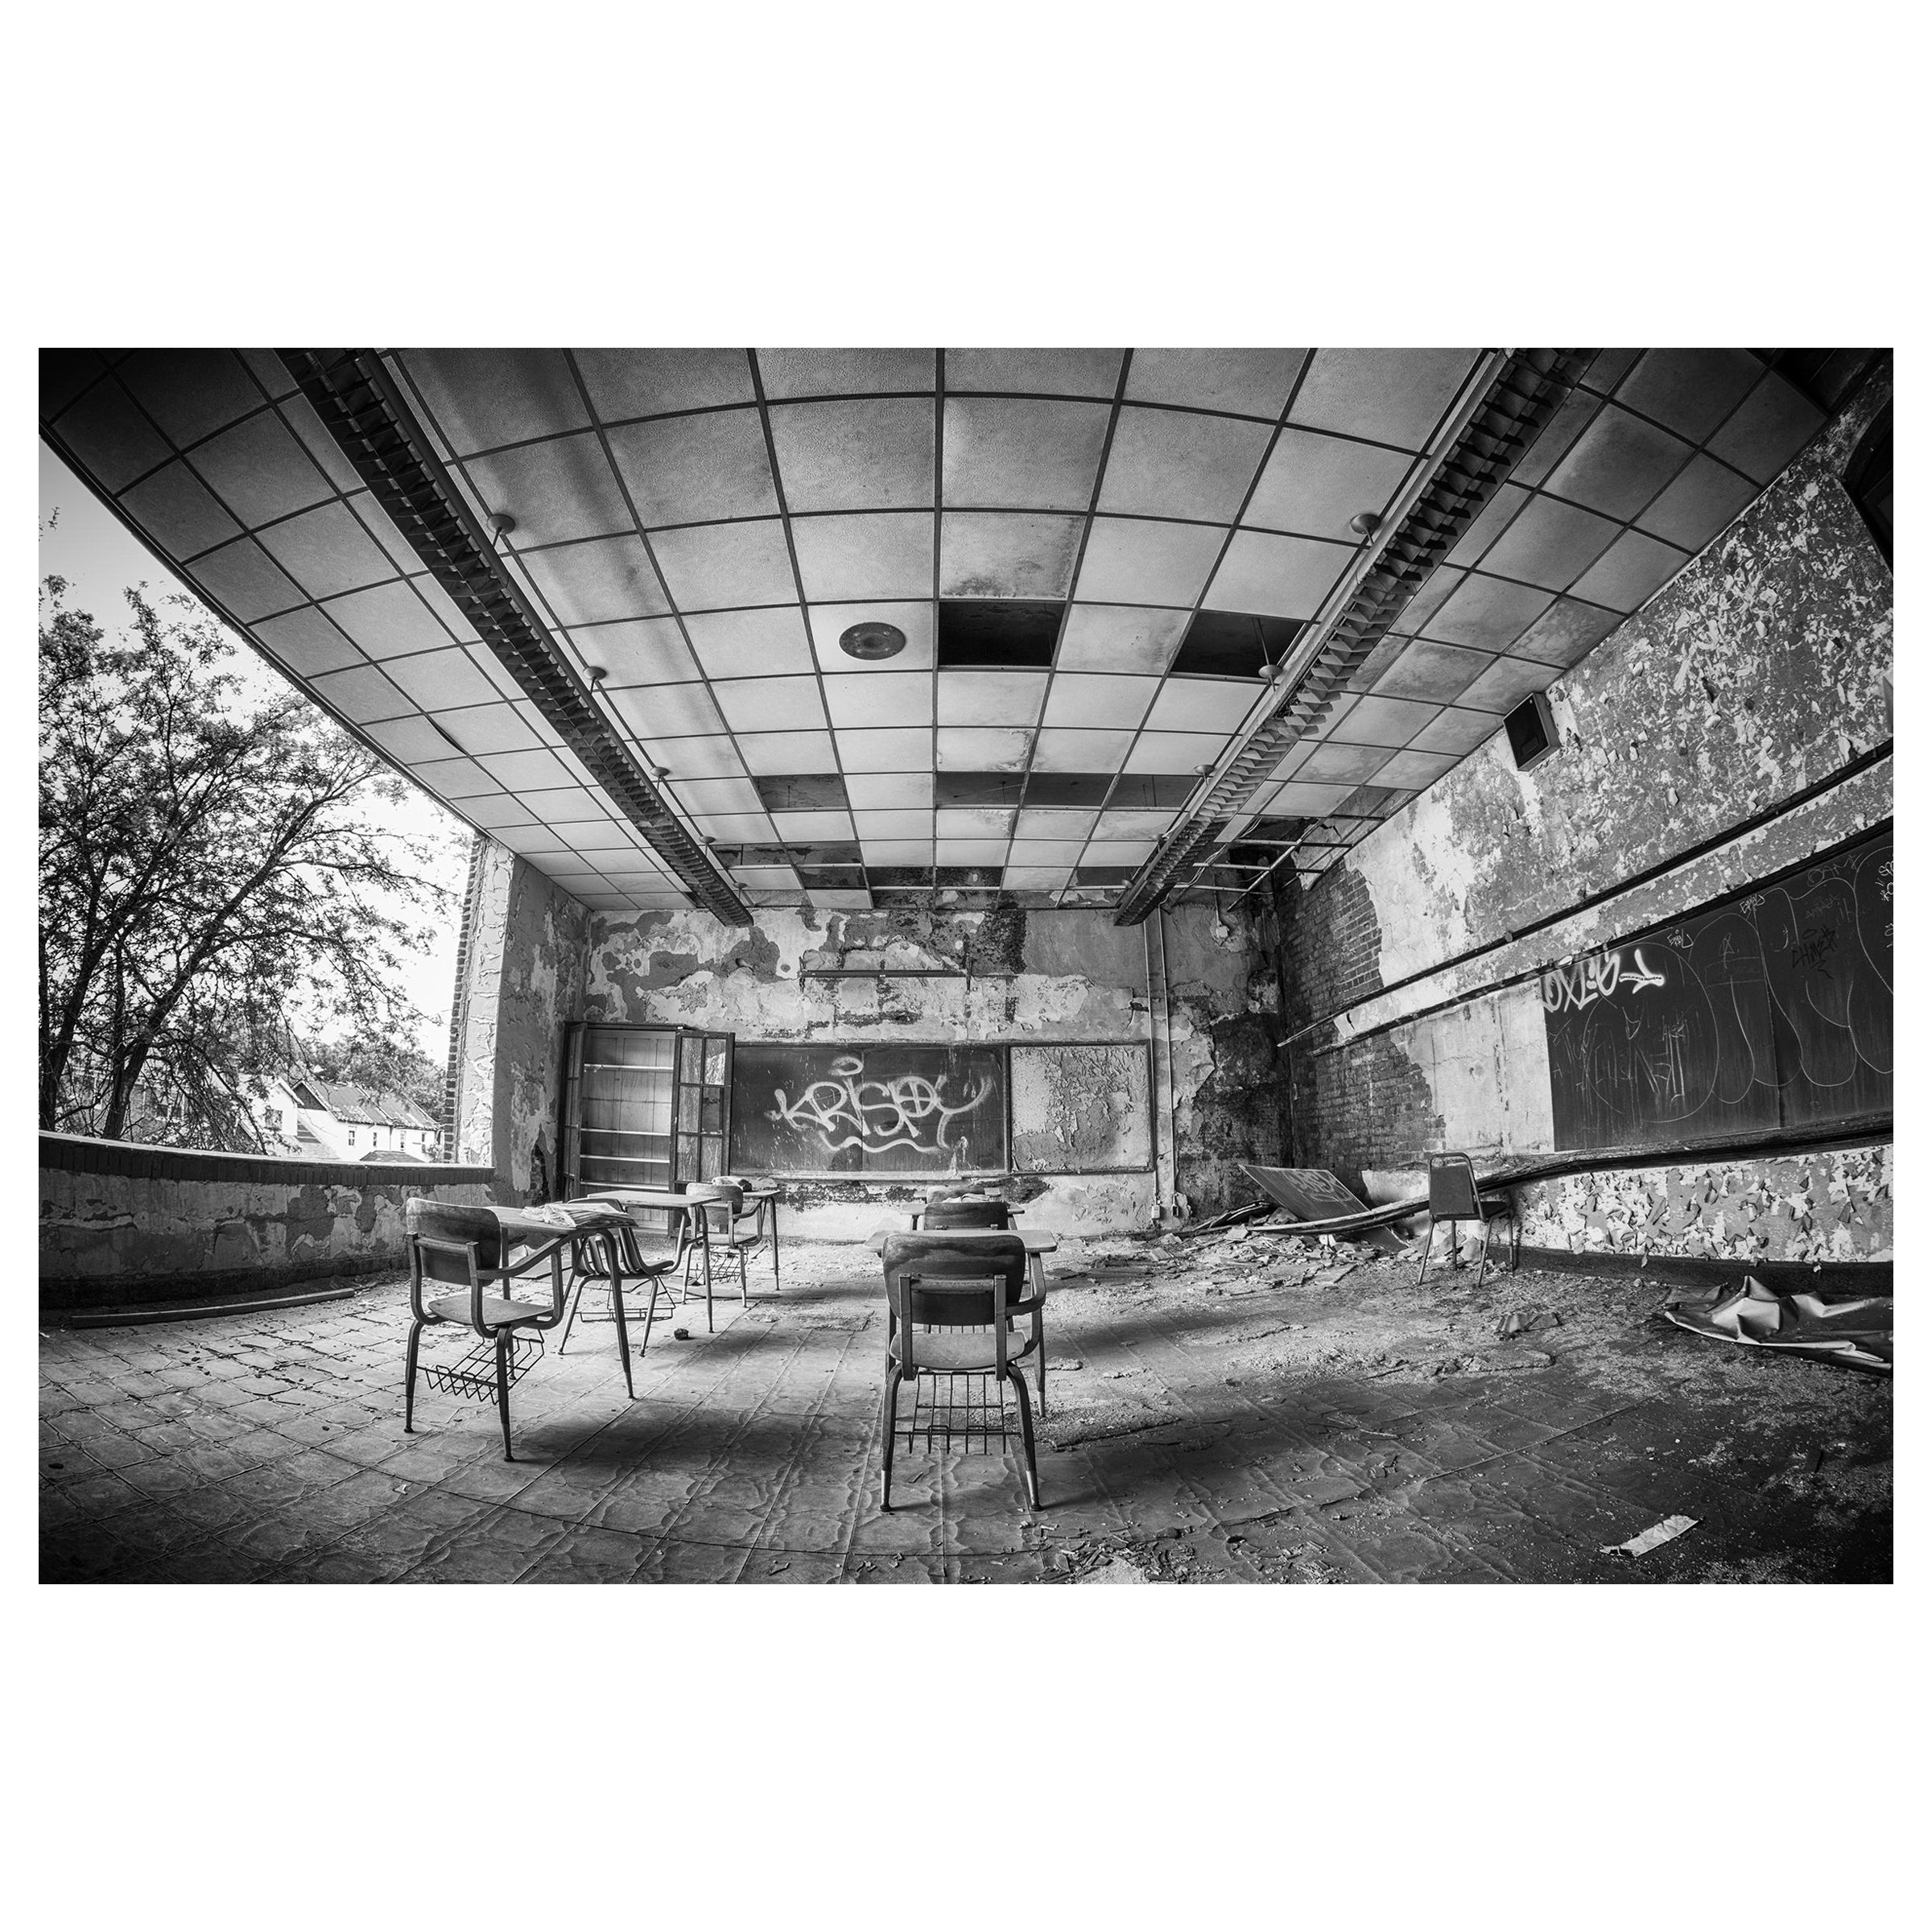 "Krispy", abandoned school, classroom, black and white, Gary, Indiana, photo - Photograph by Rebecca Skinner